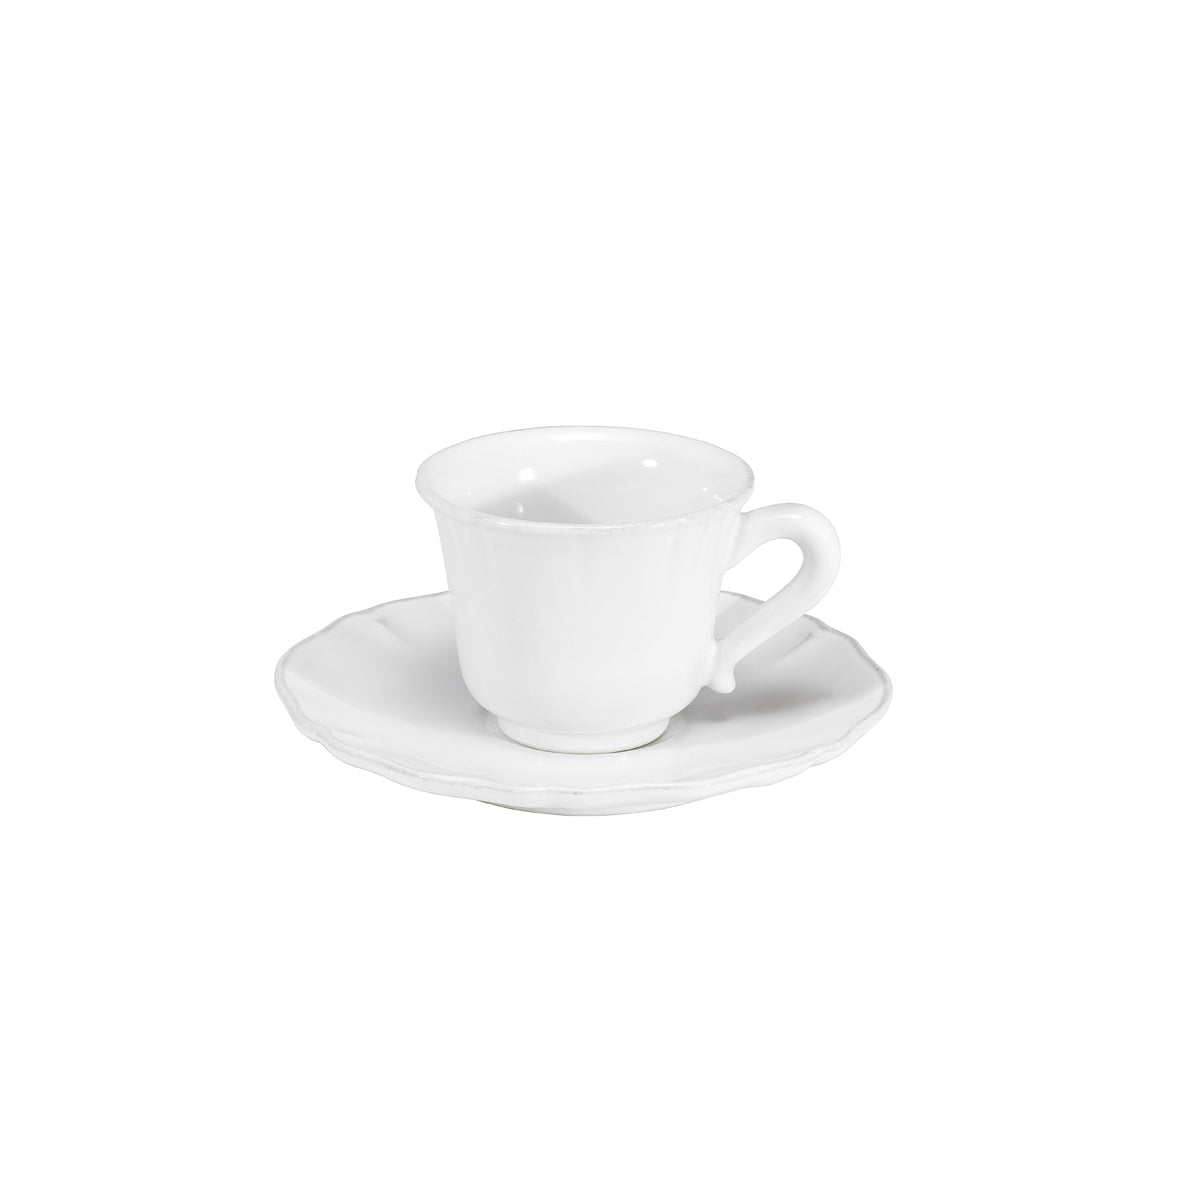 300009 Costa Nova Alentejo White Tea Cup & Saucer Set 220ml Tomkin Australia Hospitality Supplies